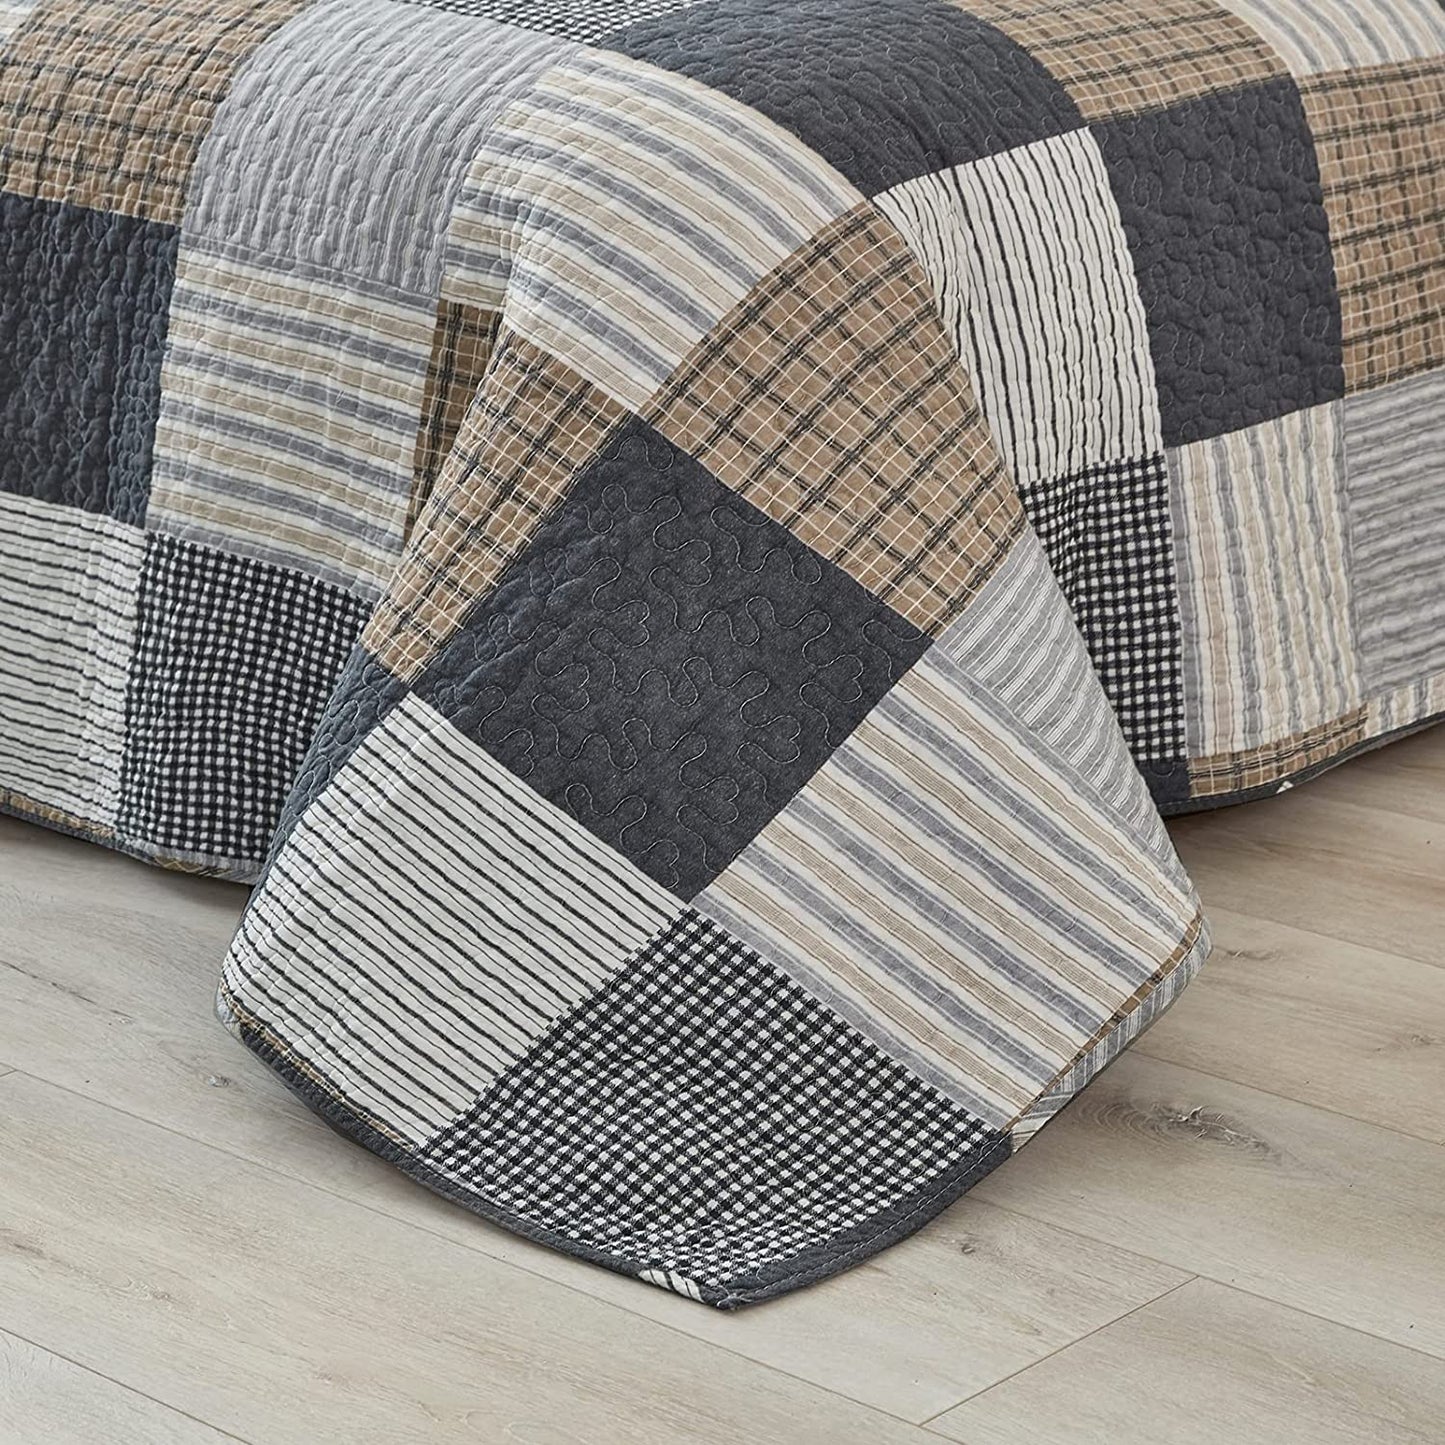 Pure Cotton Grey Black Brown Plaid Patchwork 3 Pieces Quilt Bedding Set with 2 Pillowcases